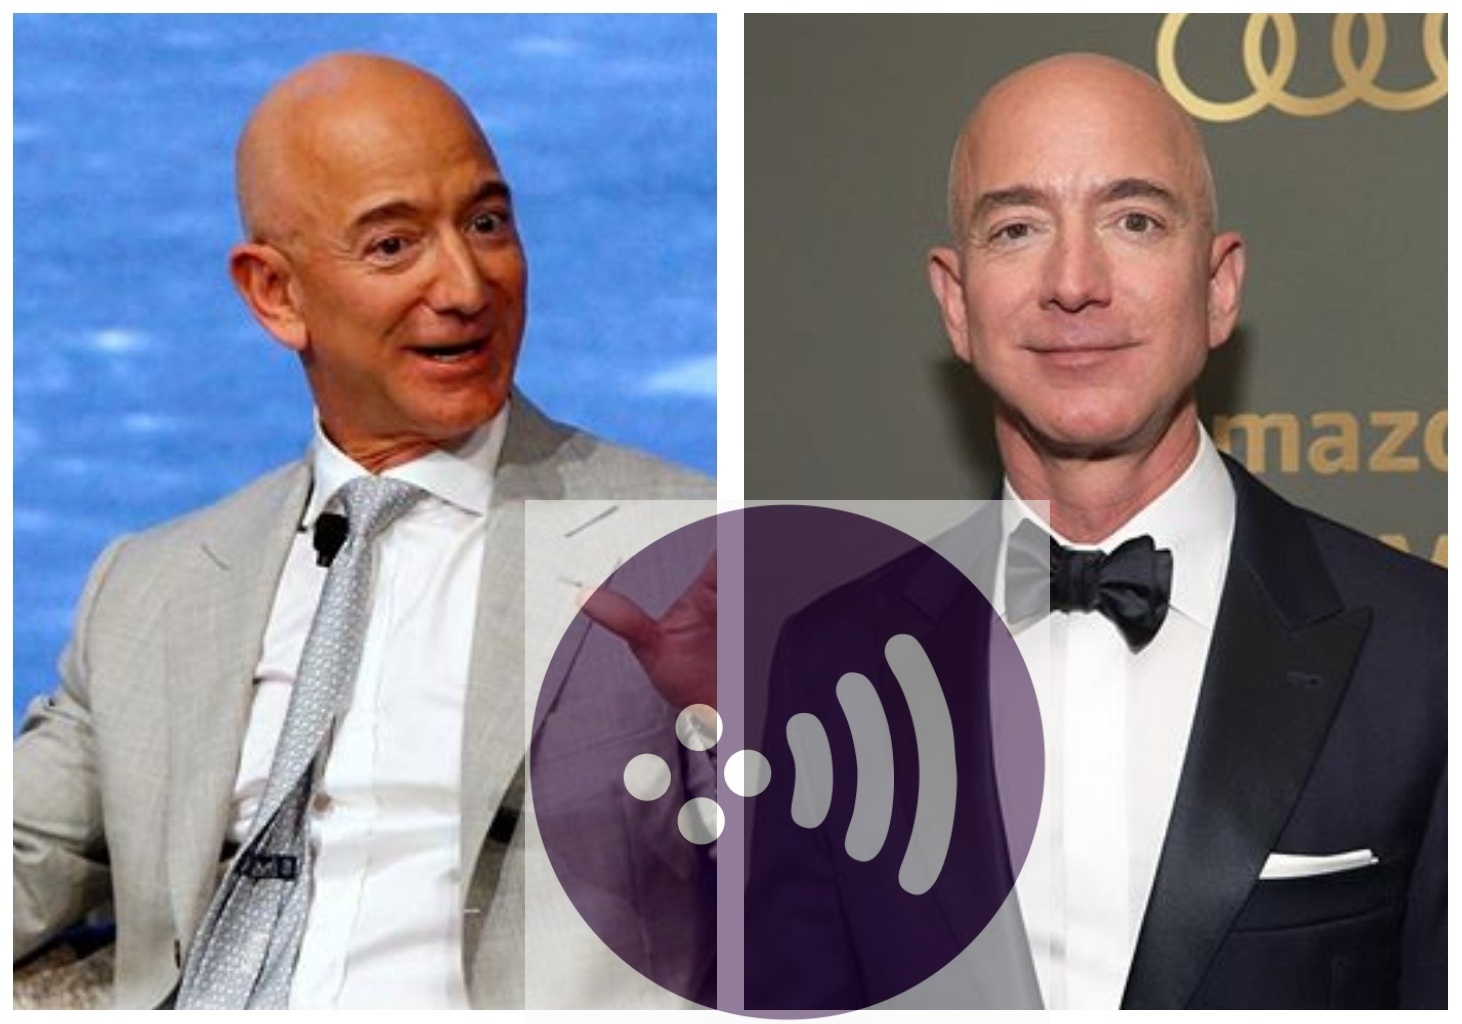 Jeff Bezos set to become a Trillionaire by 2026 despite Coronavirus crisis